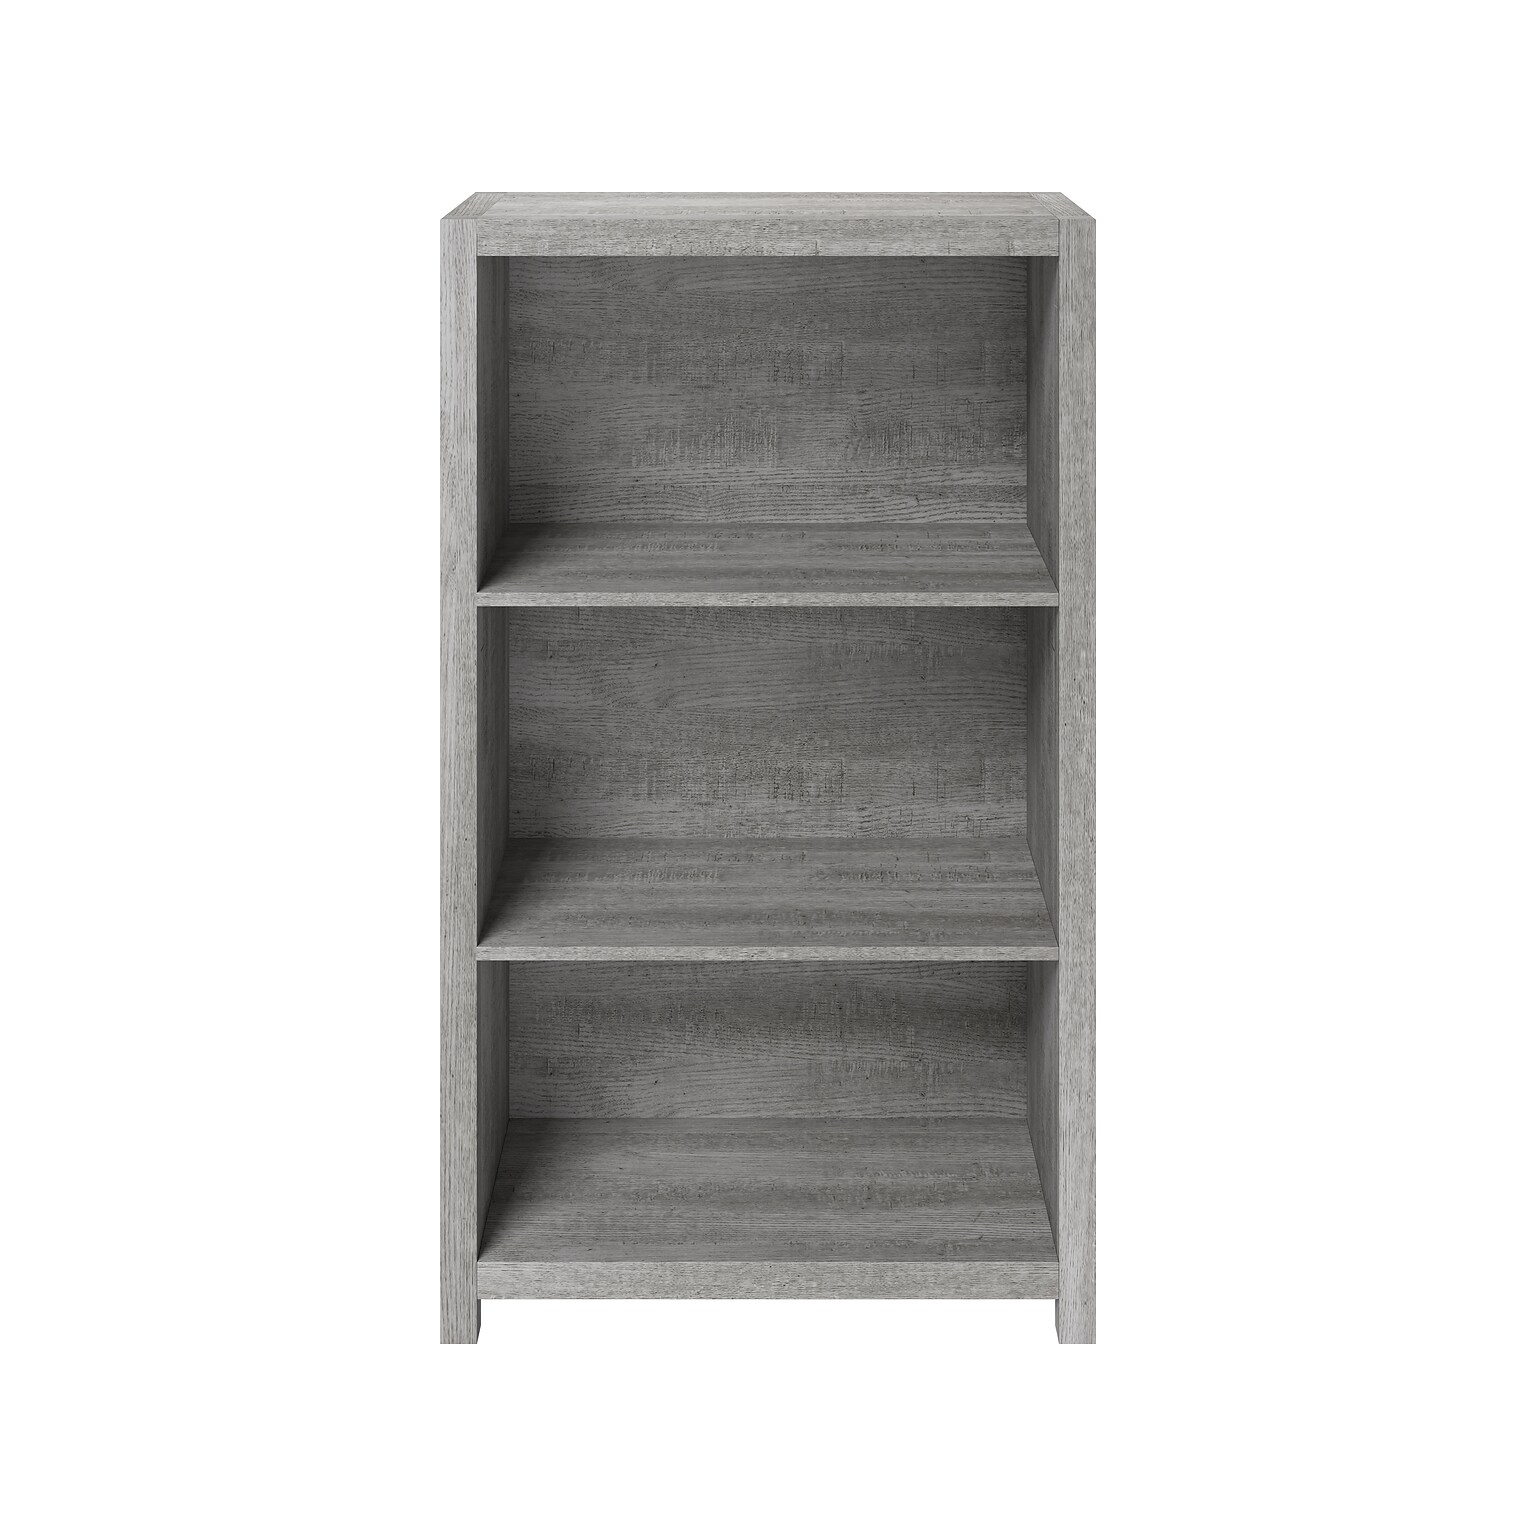 Whalen Fallbrook 3-Shelf 48H Bookcase, Smoked Ash/Rustic Warm Gray (SPUS-FBBK-GM)